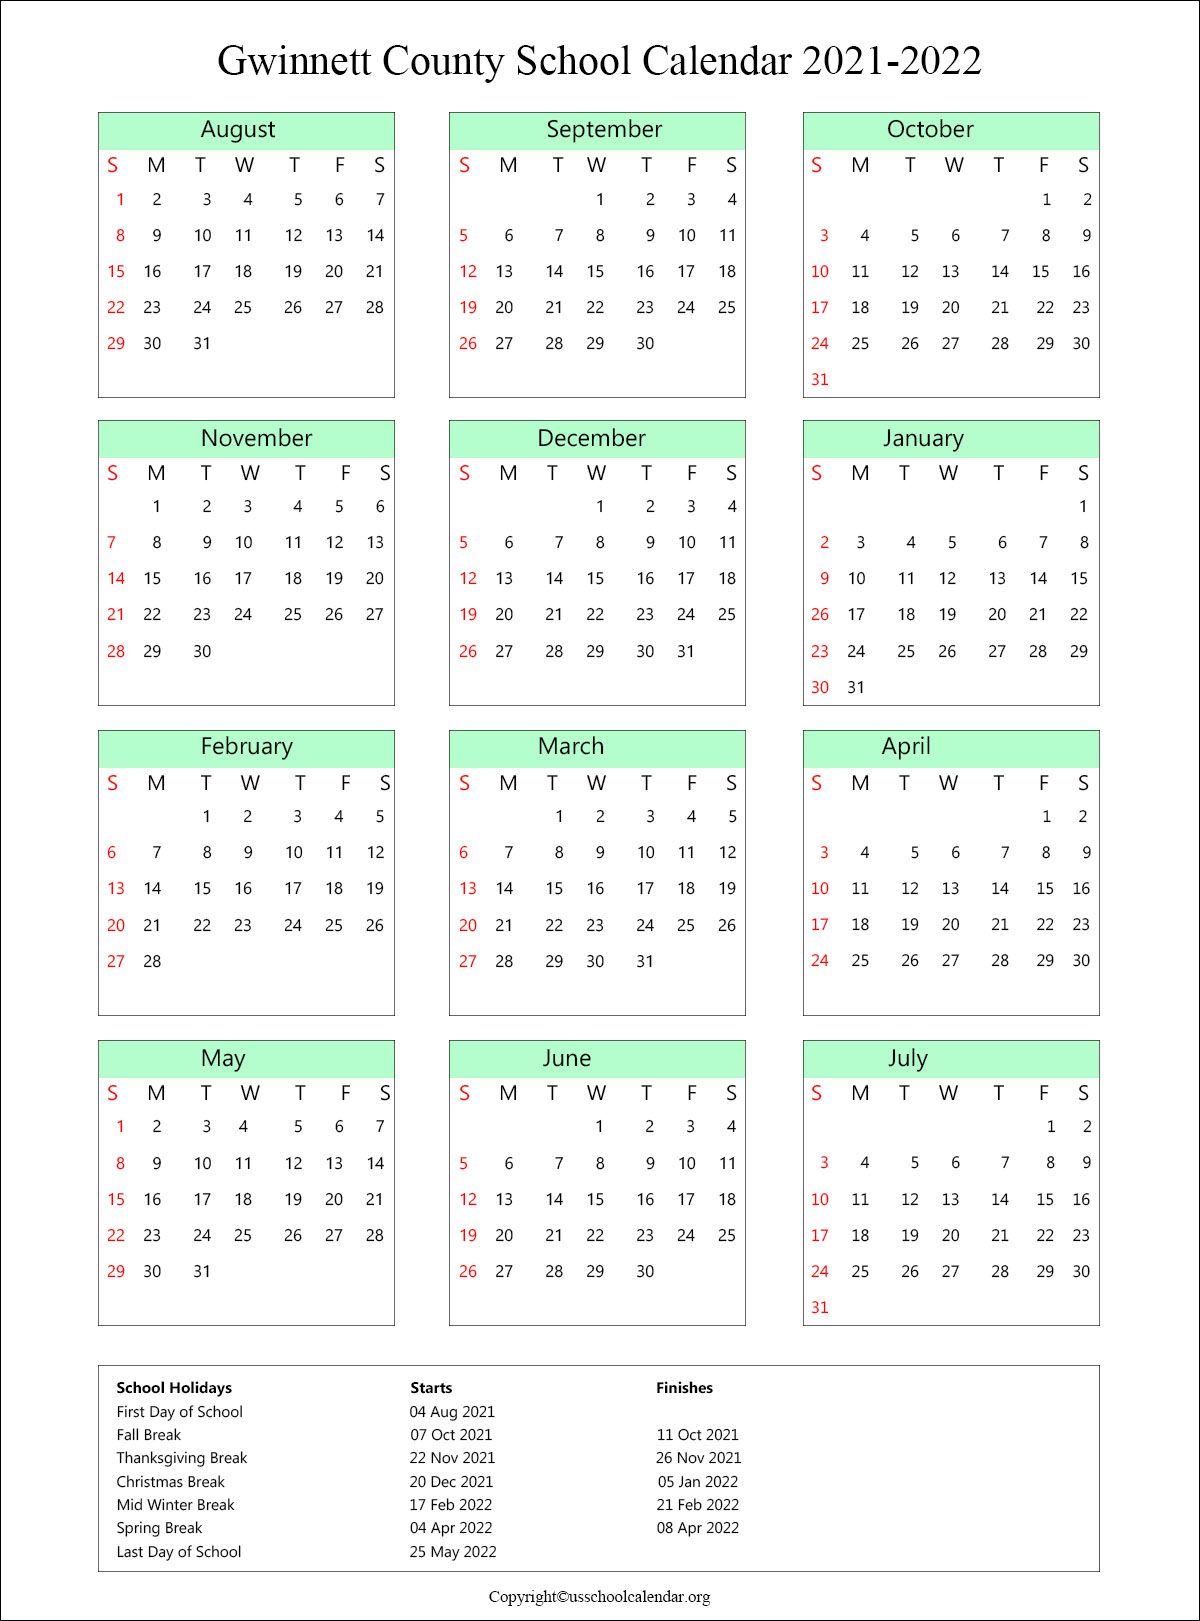 Gcps Calendar 2022 Gwinnett County School Calendar With Holidays 2021-2022